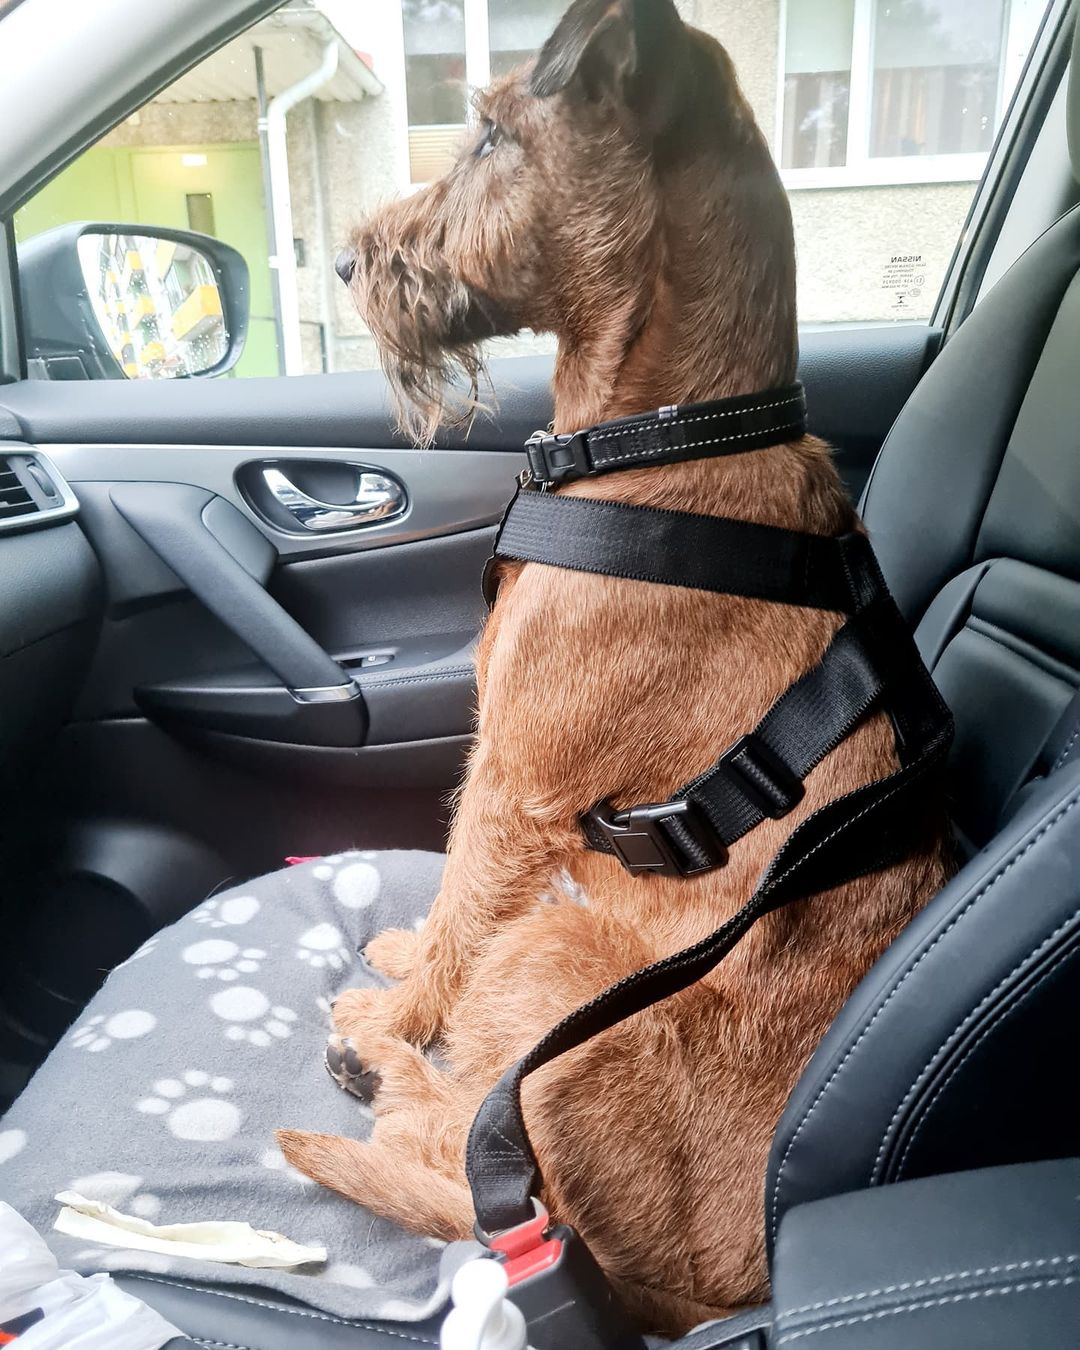 Dog Seat Belt Car Harness - Active Pets